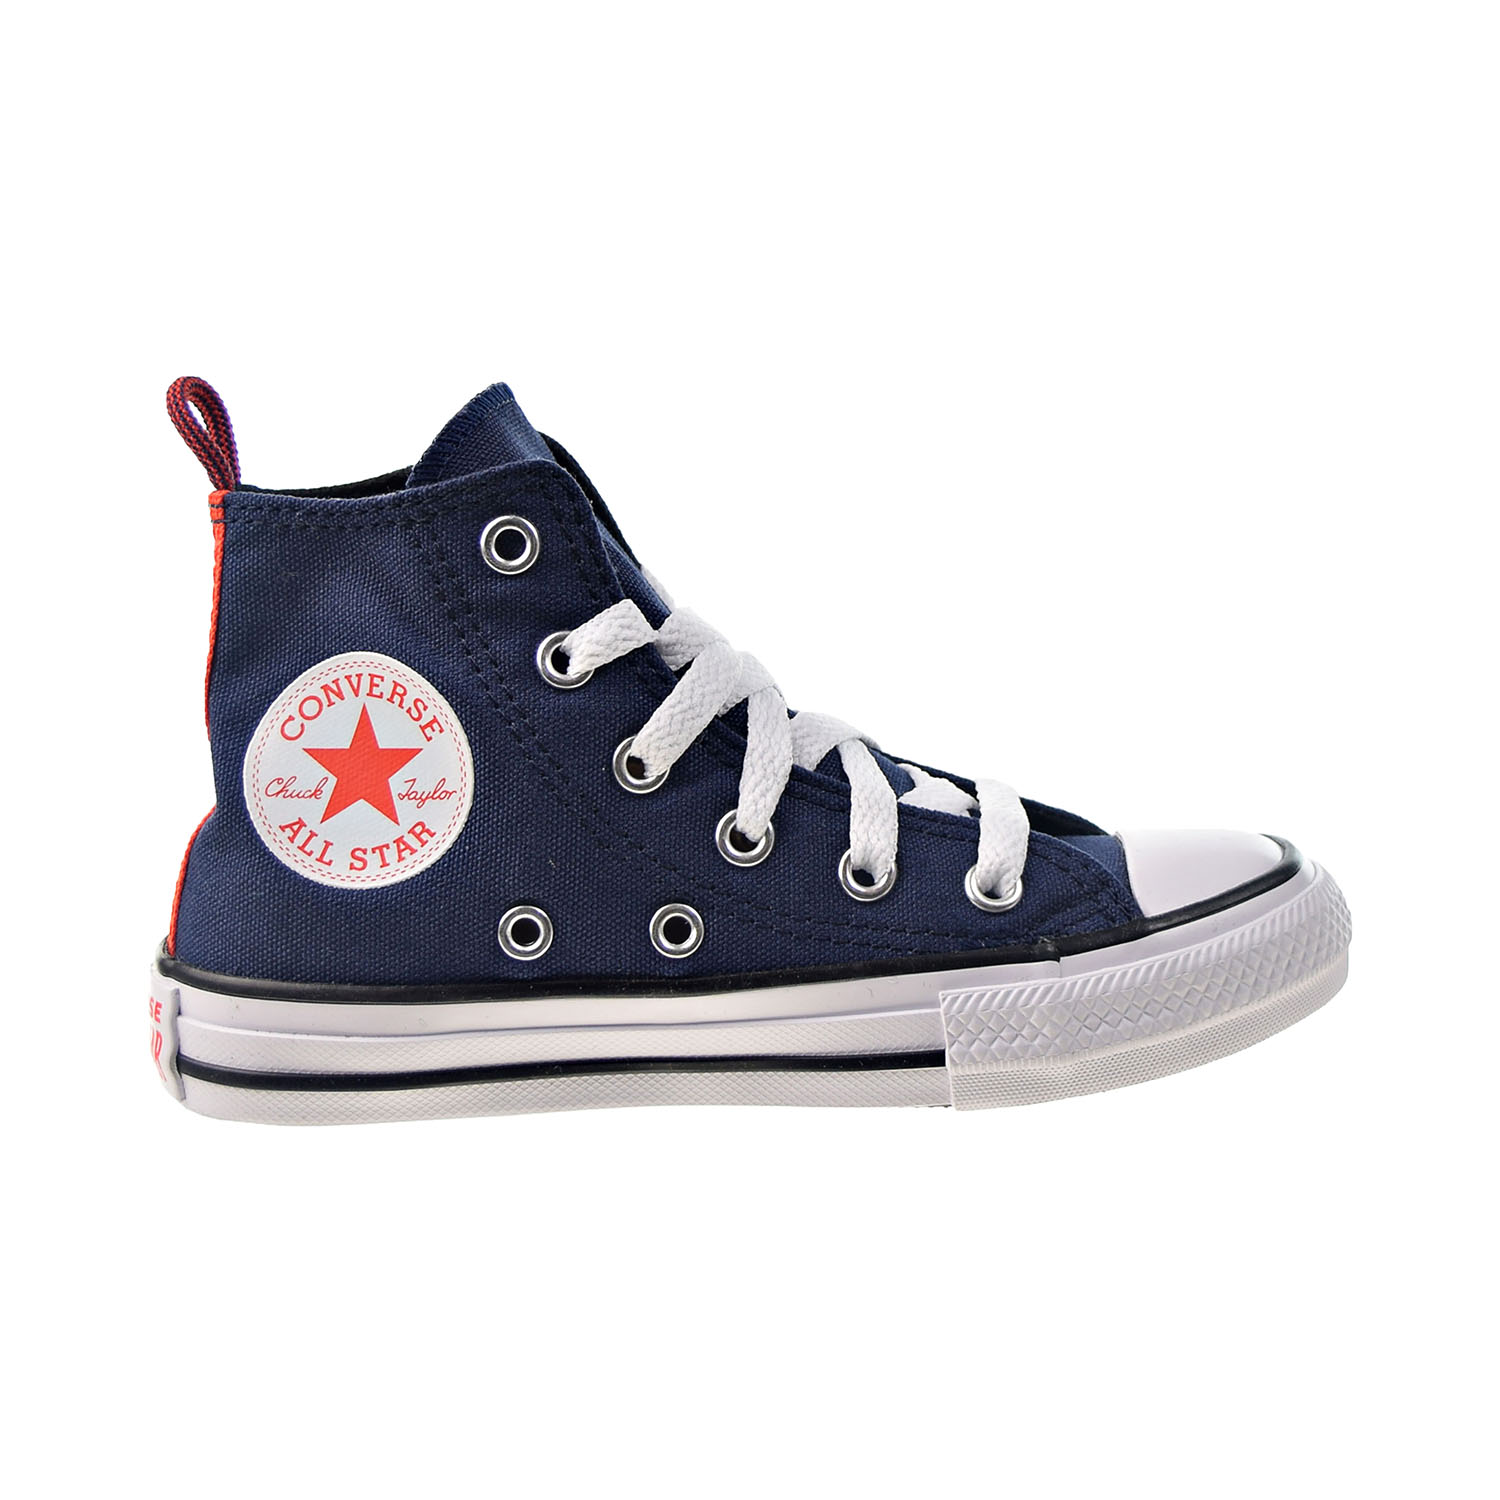 Converse Chuck Taylor All Star Hi Kids' Shoes Midnight Navy-Bright Orange 670671f - image 1 of 6